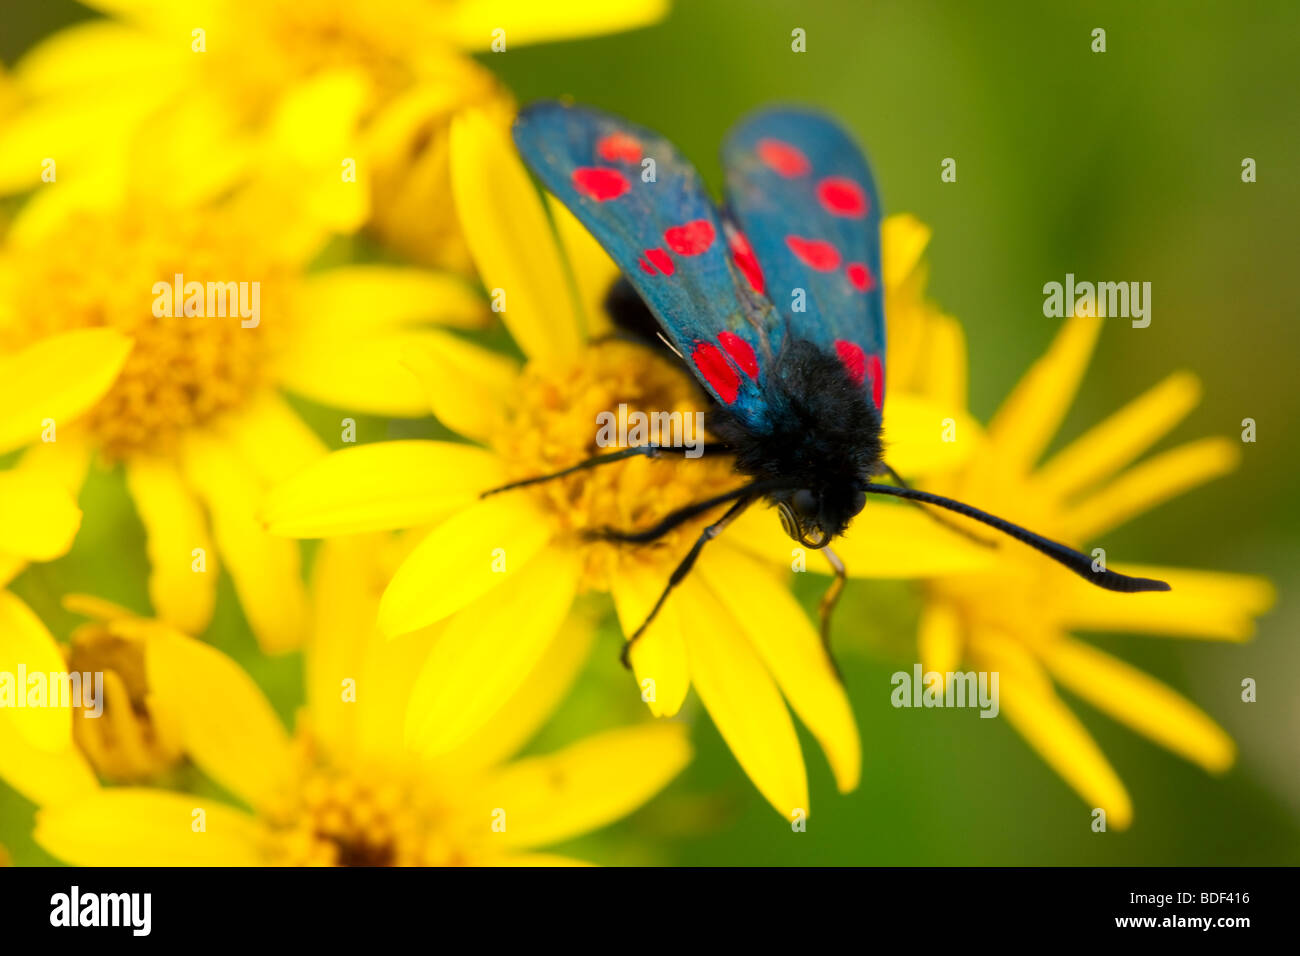 England, Tyne and Wear. Six-Spot Burnet Moth (Zygaena filipendulae) on a wild flower near the St Mary's Island nature reserve Stock Photo